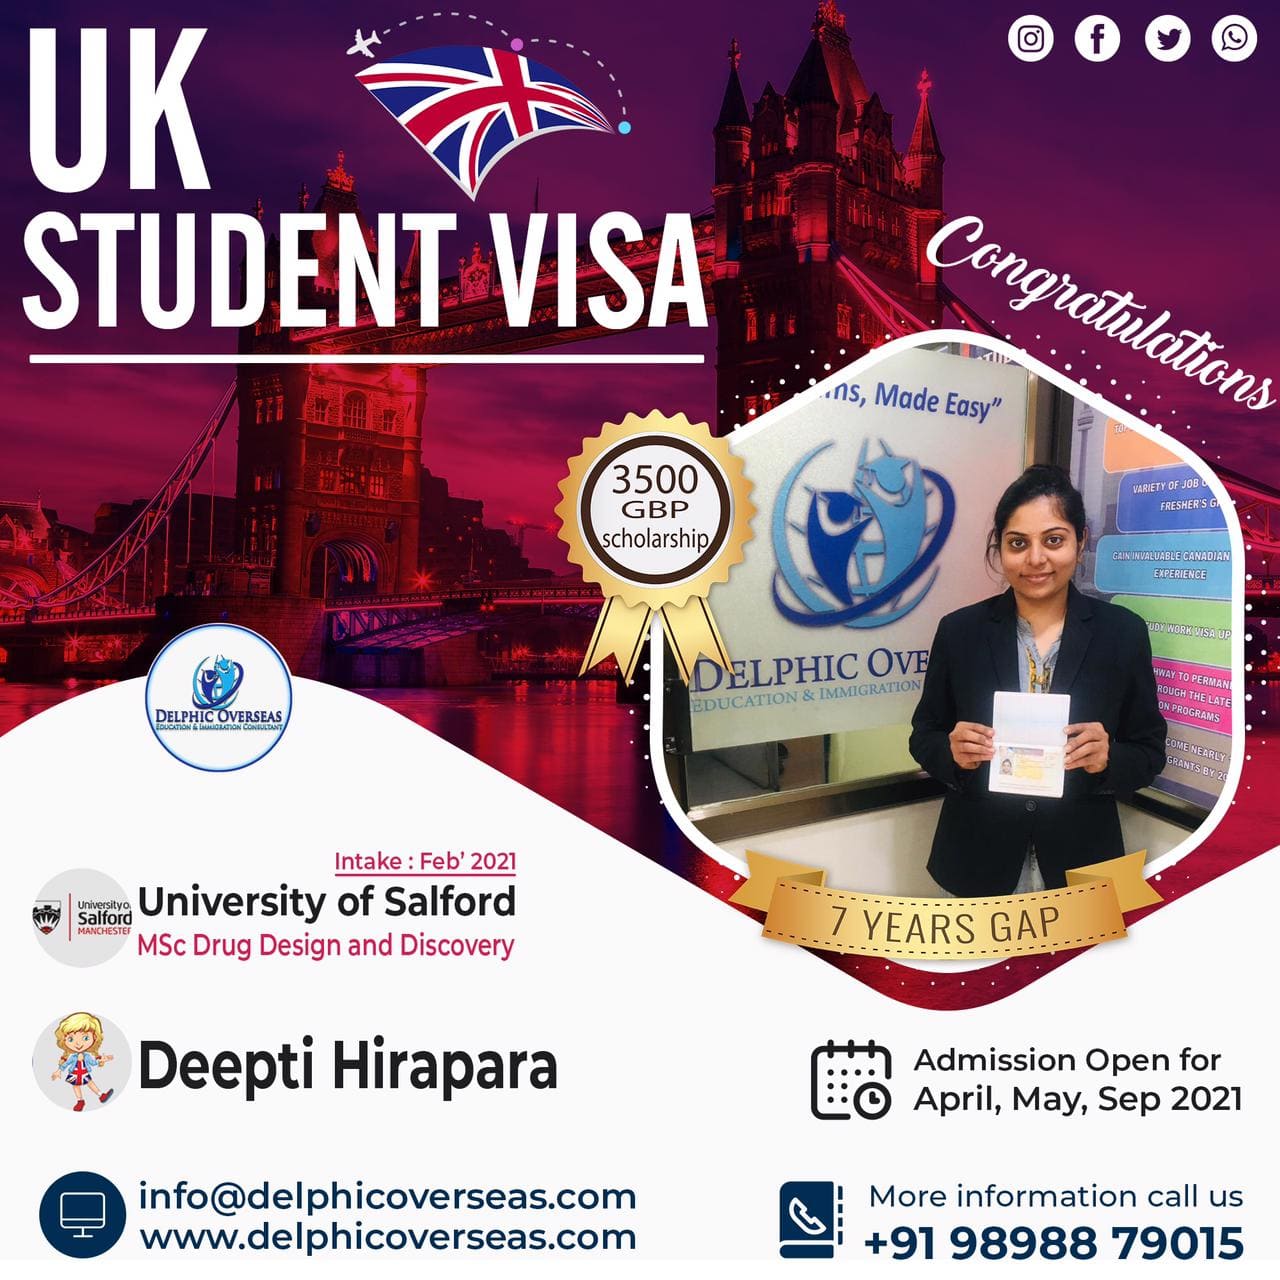 UK STUDENT VISA